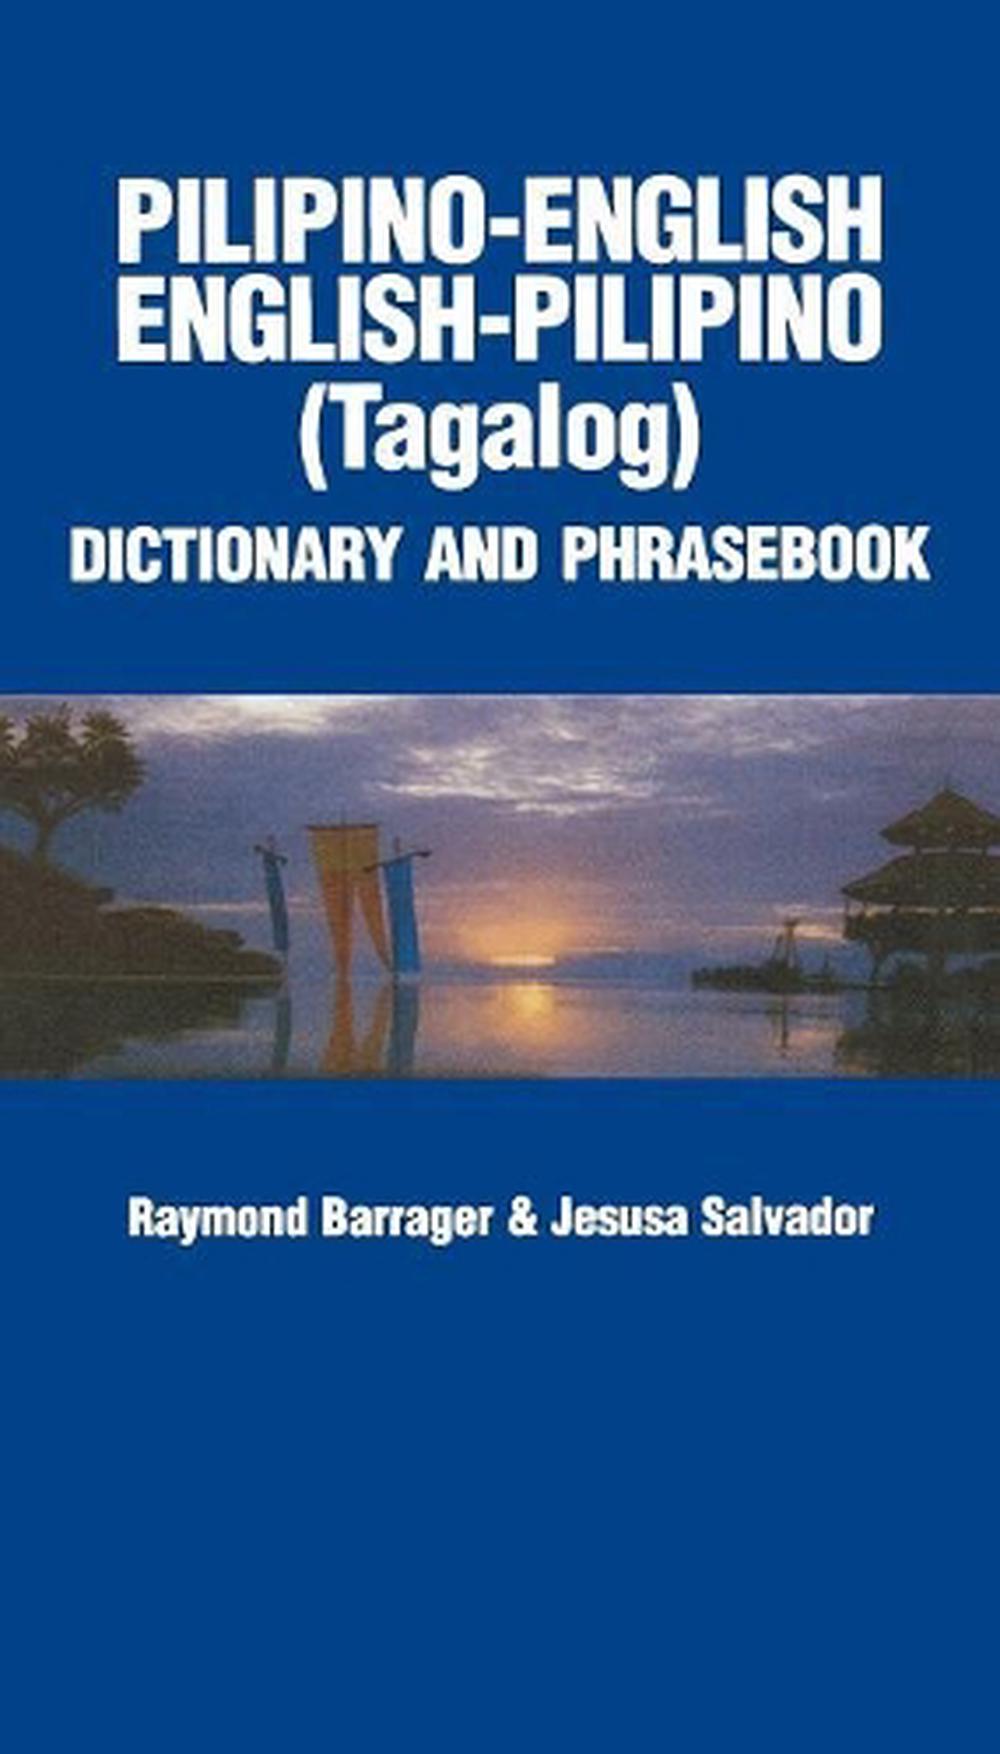 Reflection In Tagalog Dictionary : Filipino Love Quotes Learn Filipino Tagalog Love Quotes ...